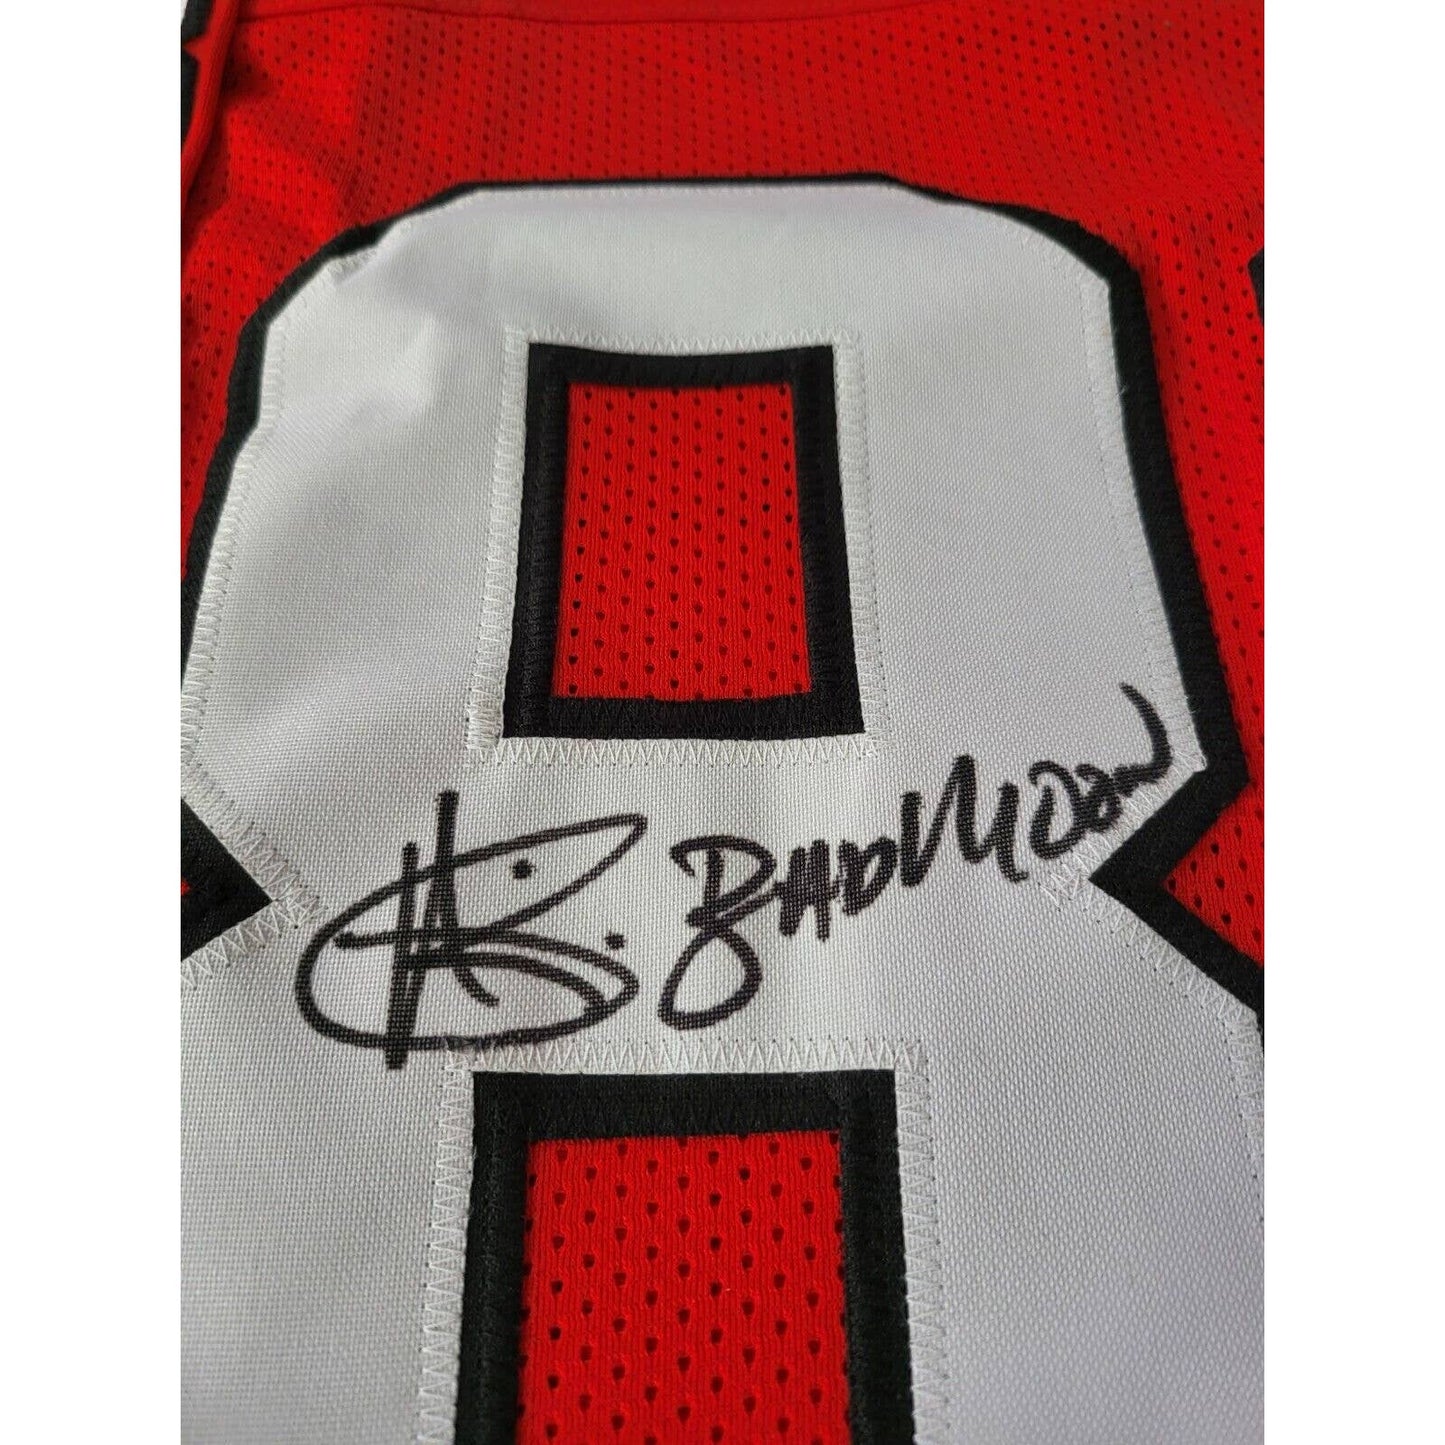 Andre Rison Autographed/Signed Jersey Schwartz COA Atlanta Falcons - TreasuresEvolved